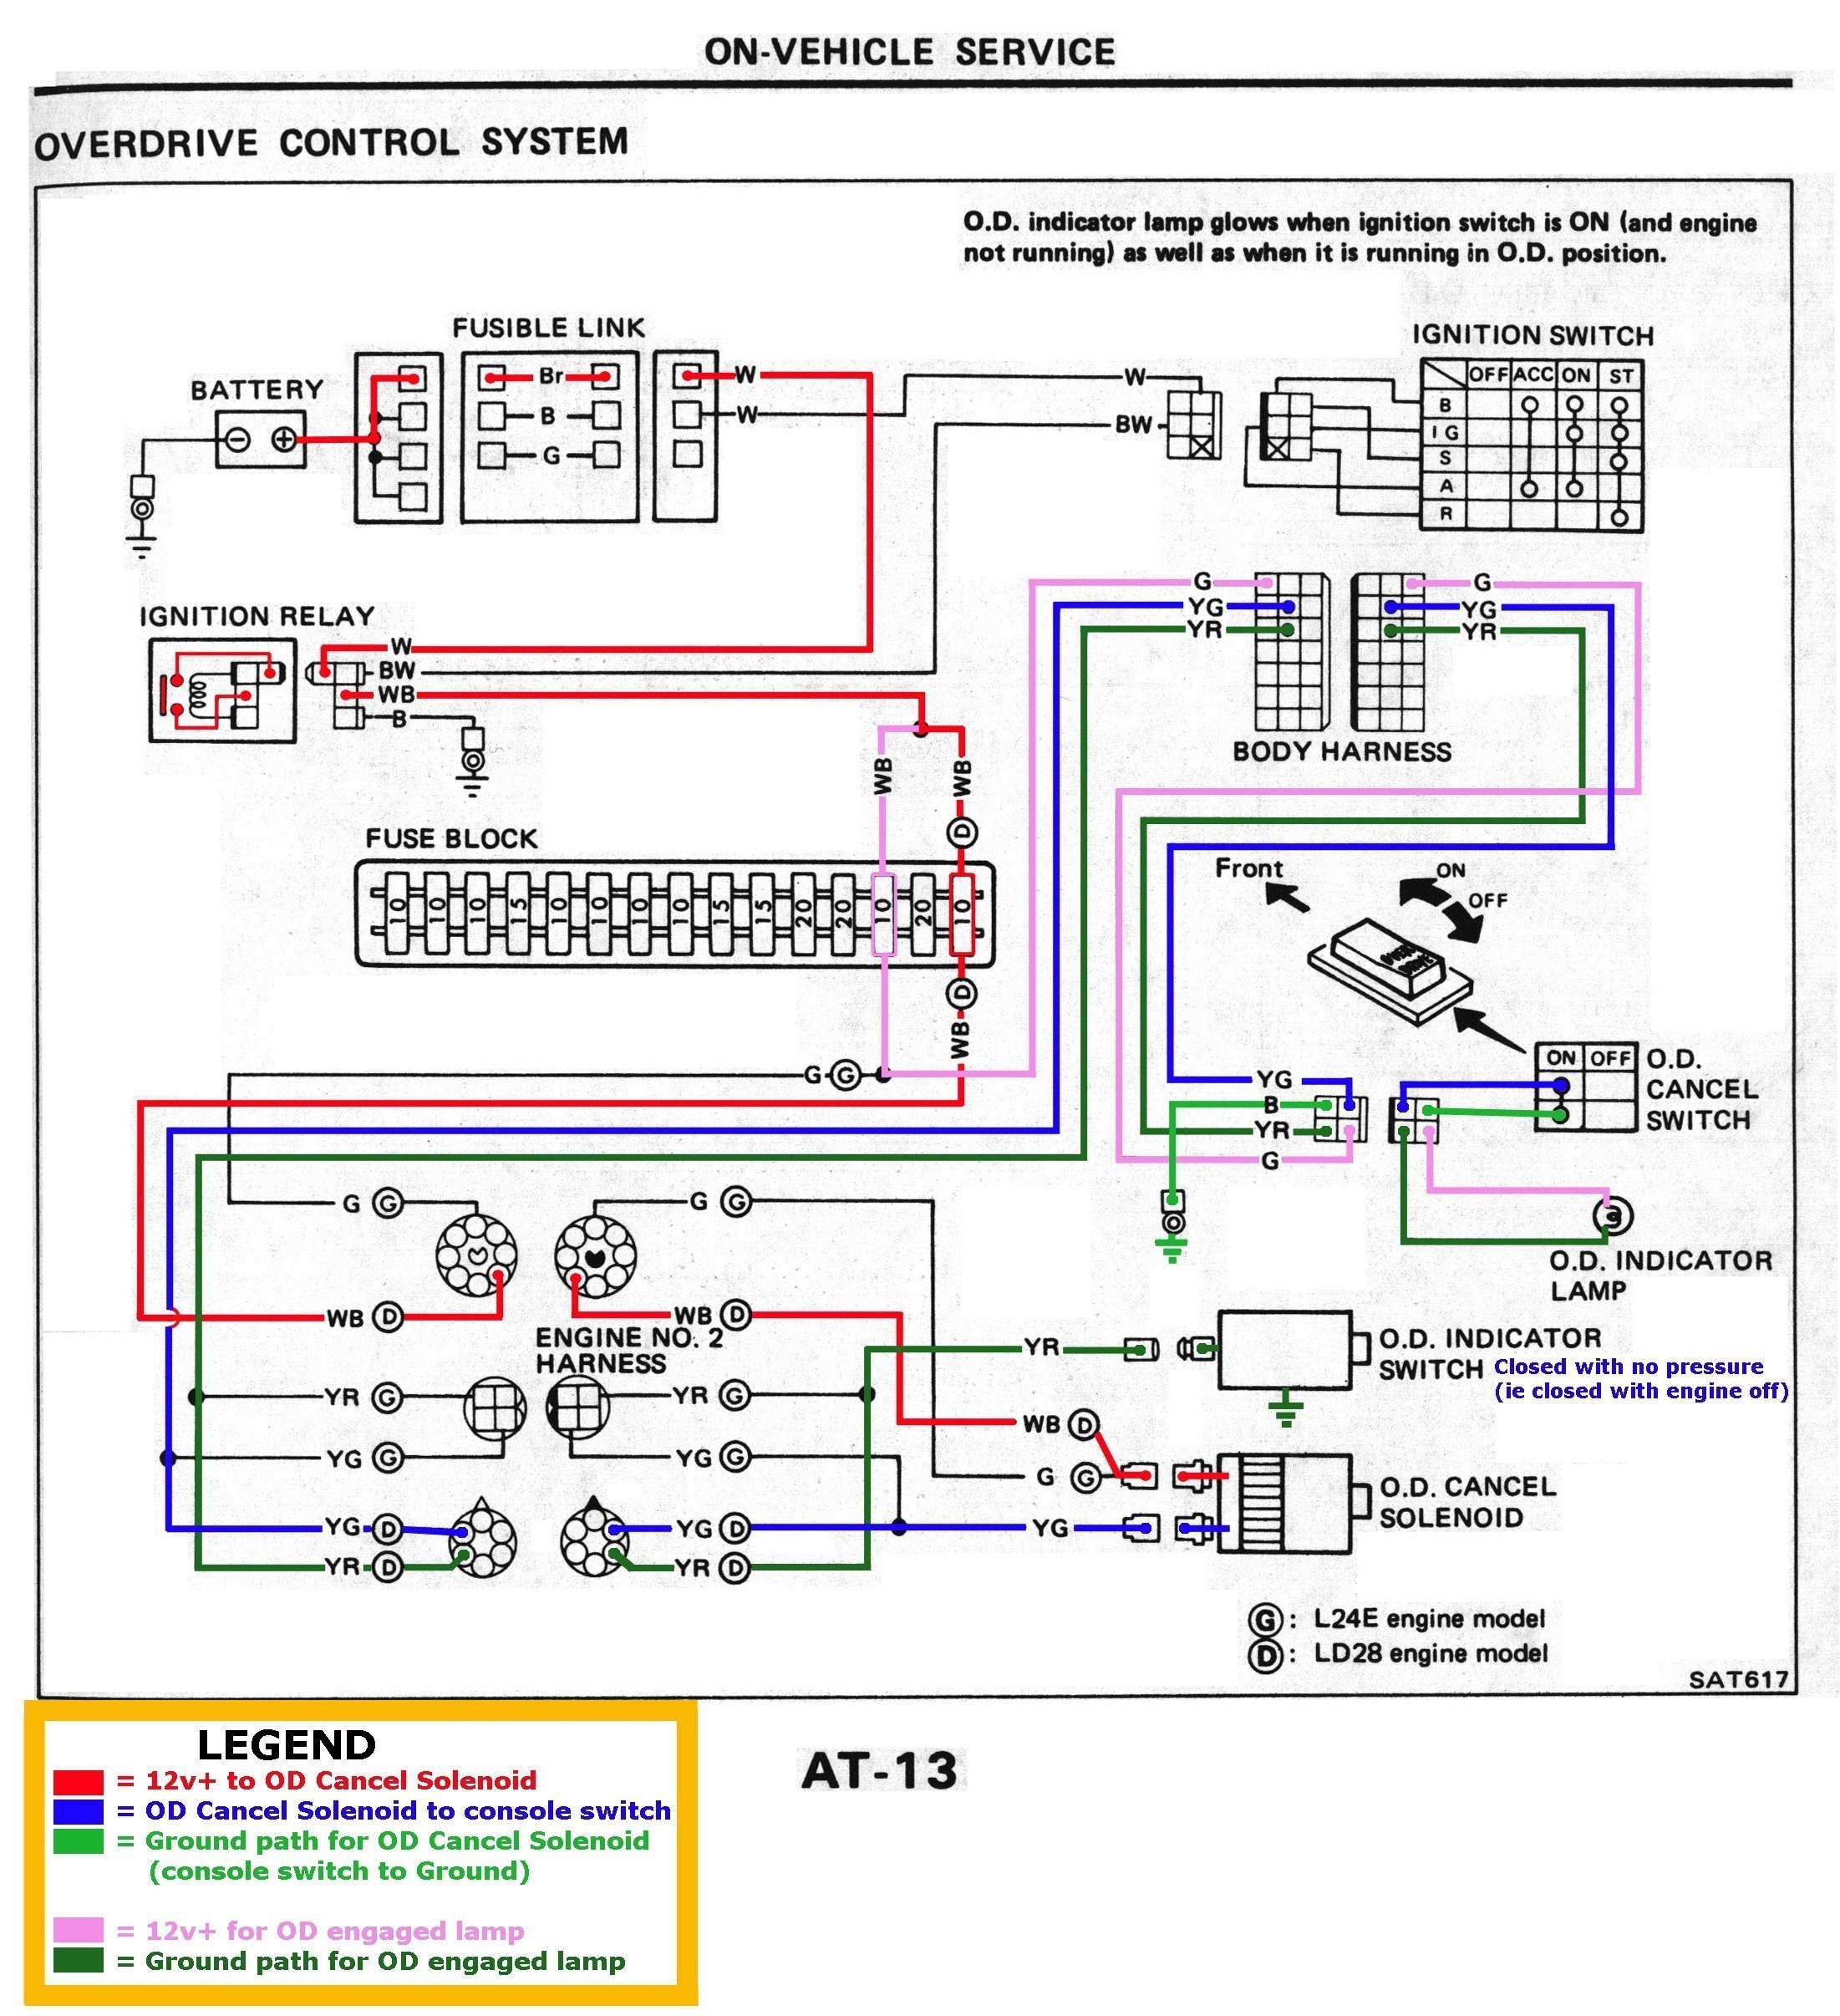 Wiring Diagram For 3 Phase Motor Starter Rate 3 Phase Motor Starter Wiring Diagram Fresh Wiring Diagram For 3